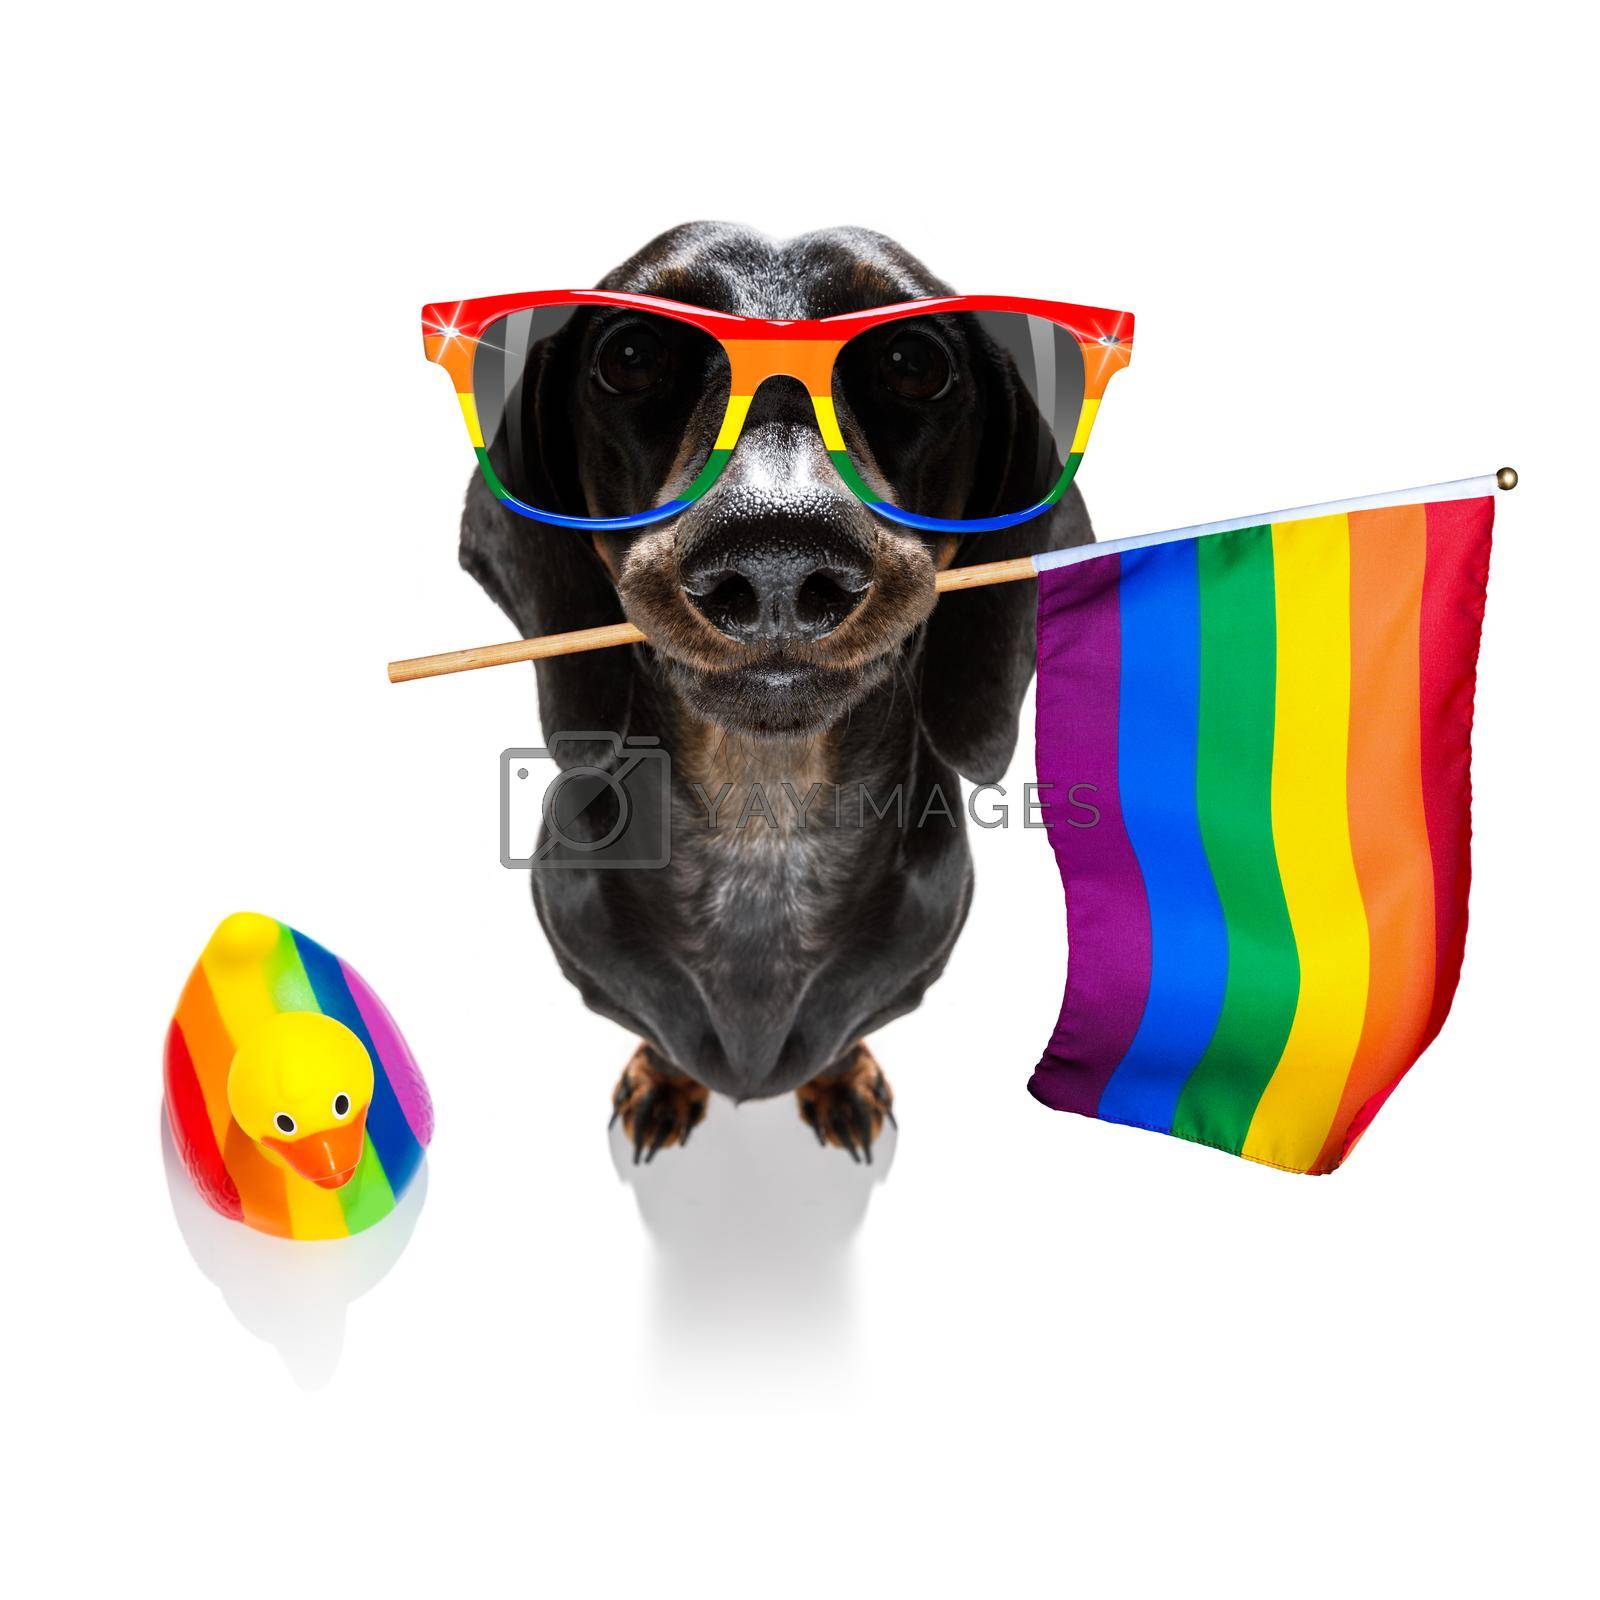 Royalty free image of gay pride dog by Brosch